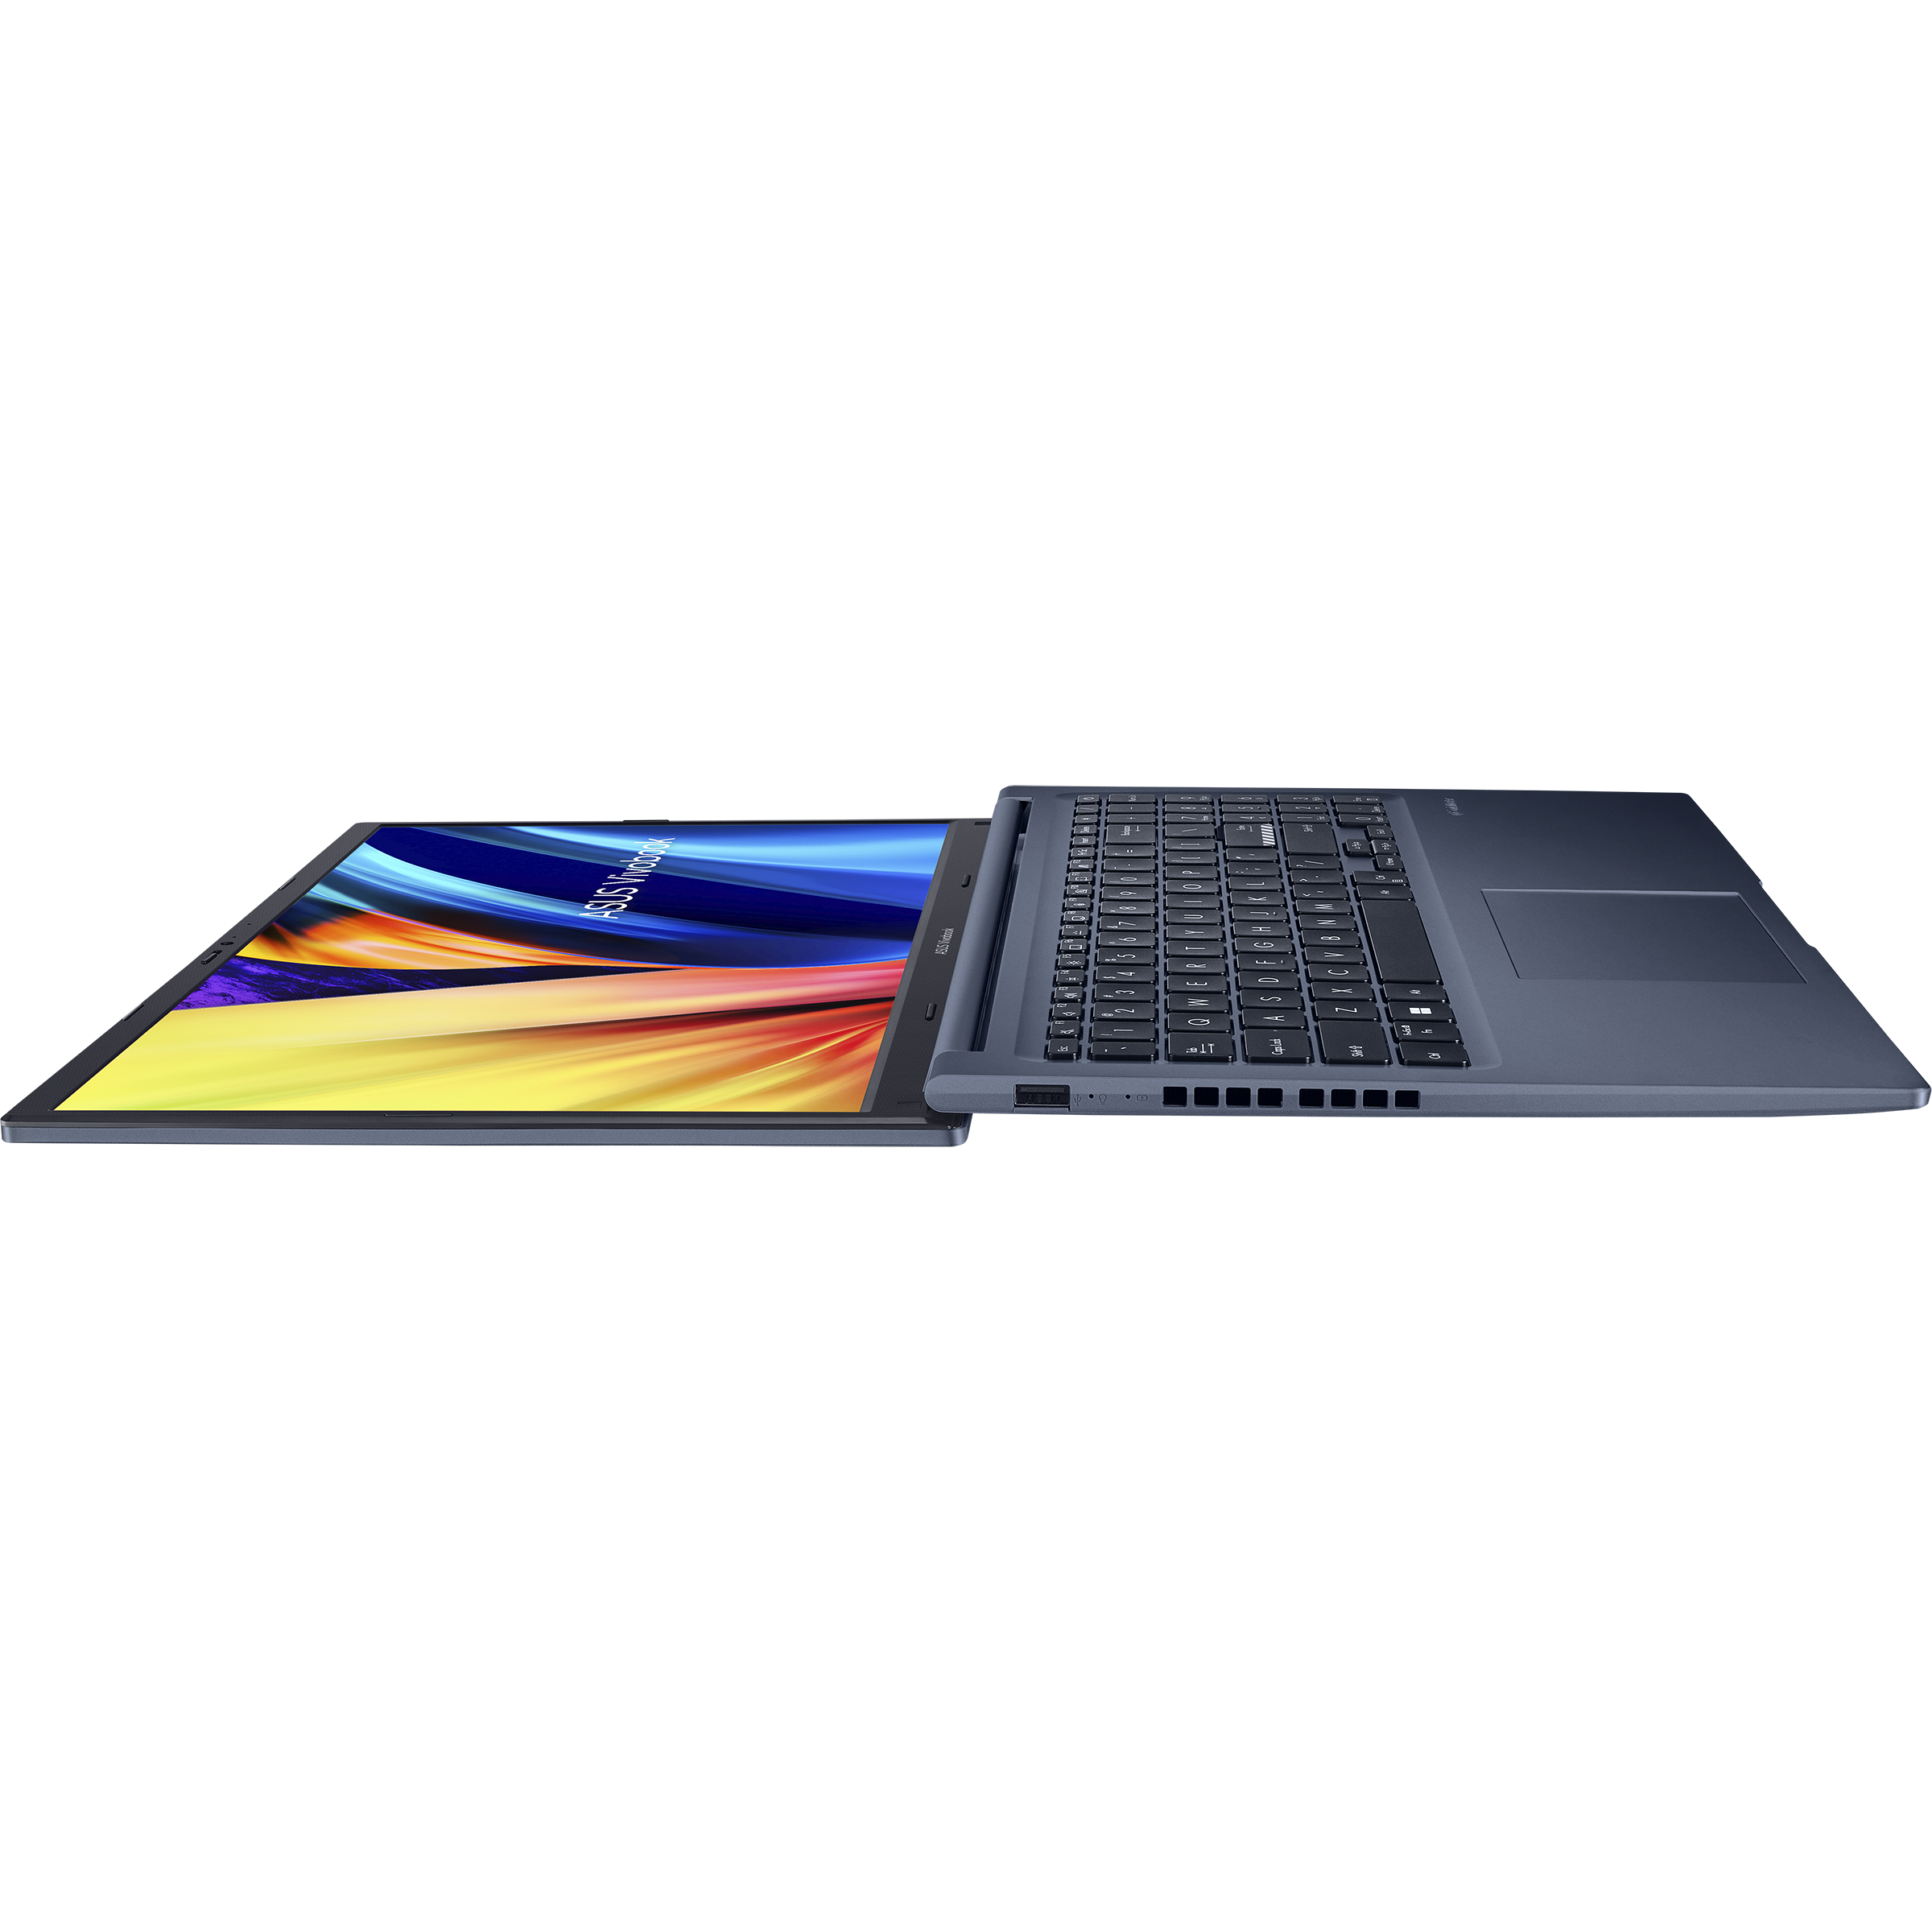 Vivobook 15 (F1502, 12th Gen Intel)｜Laptops For Home｜ASUS USA